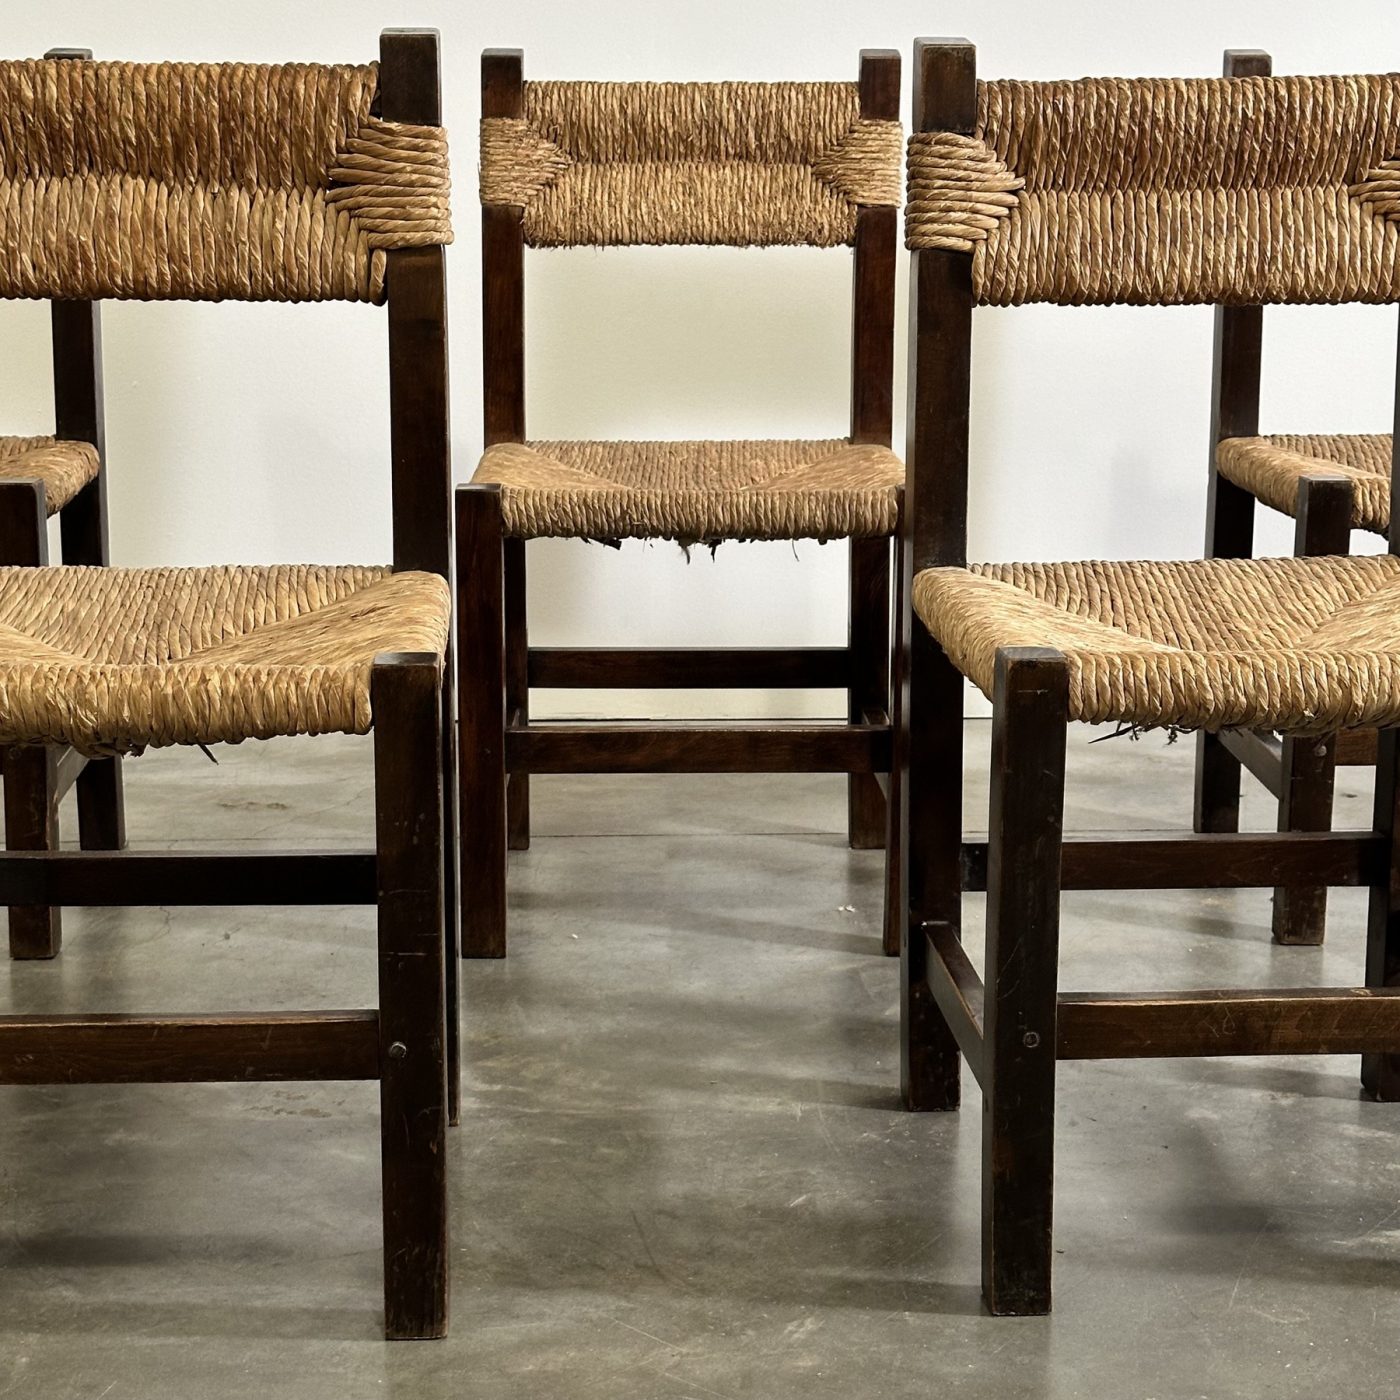 objet-vagabond-straw-chairs0007